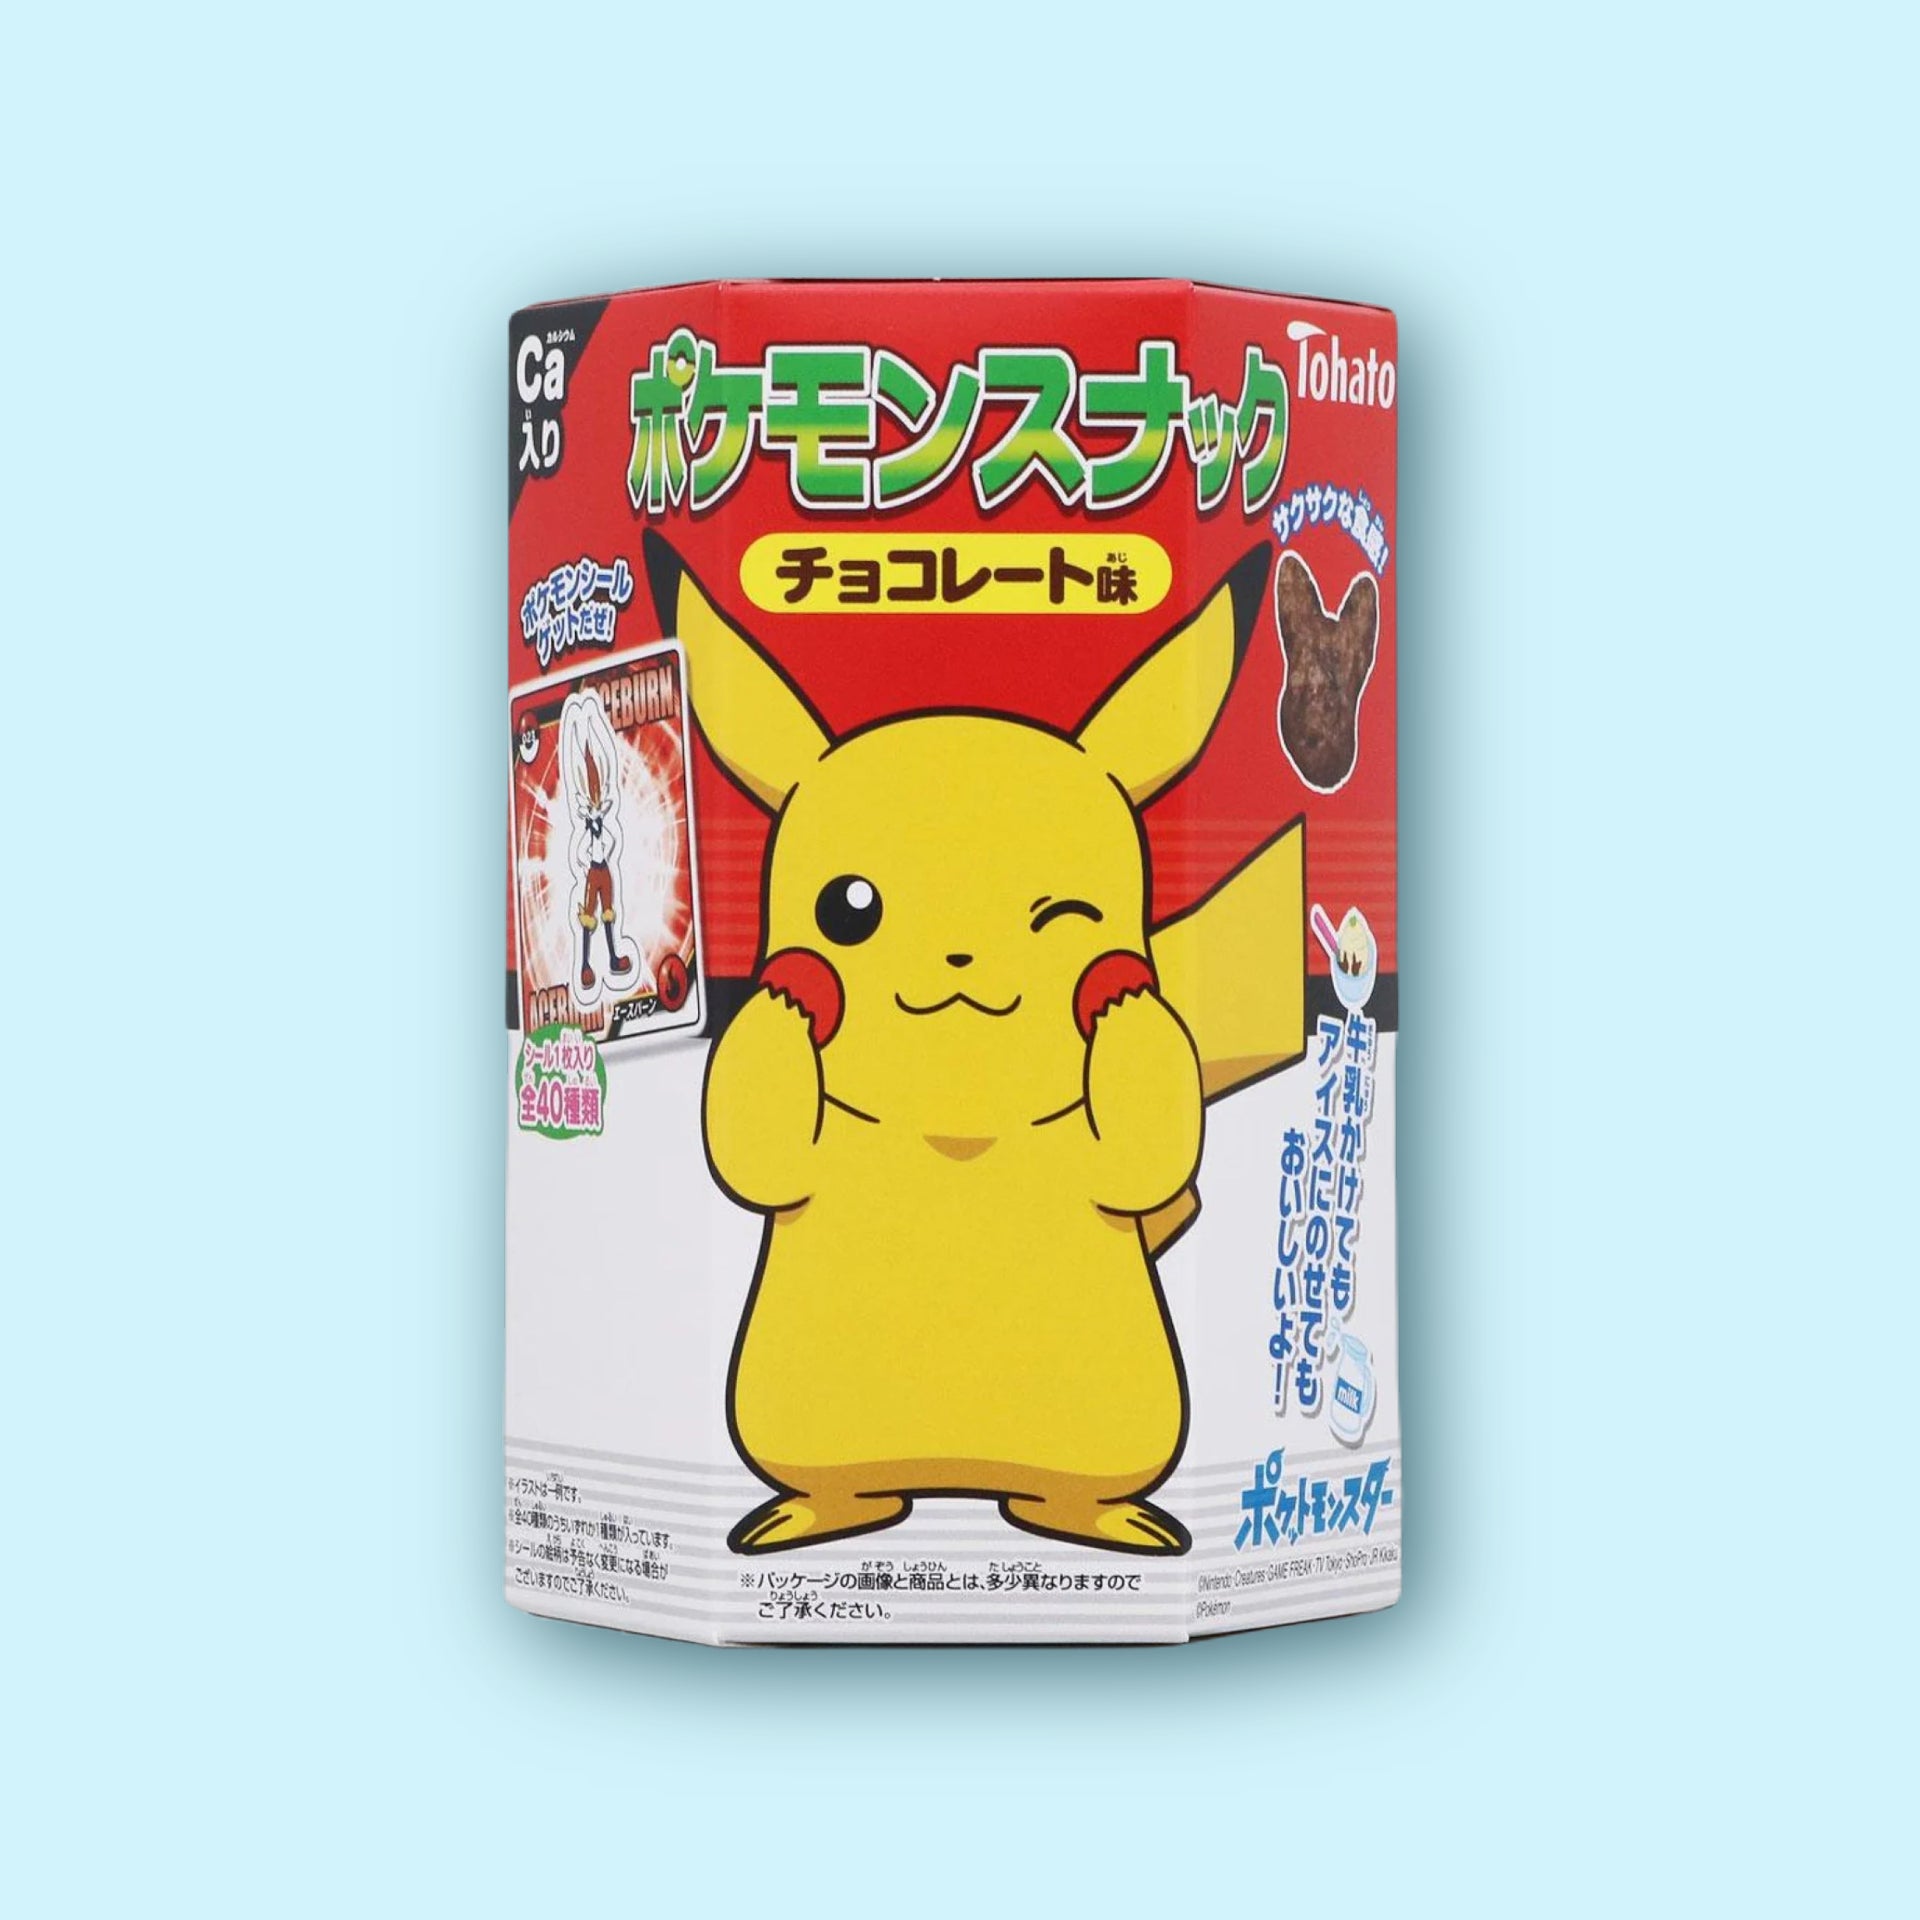 Munch Addict Candy & Chocolate Tohato Pokemon Chocolate Snack (Japan)